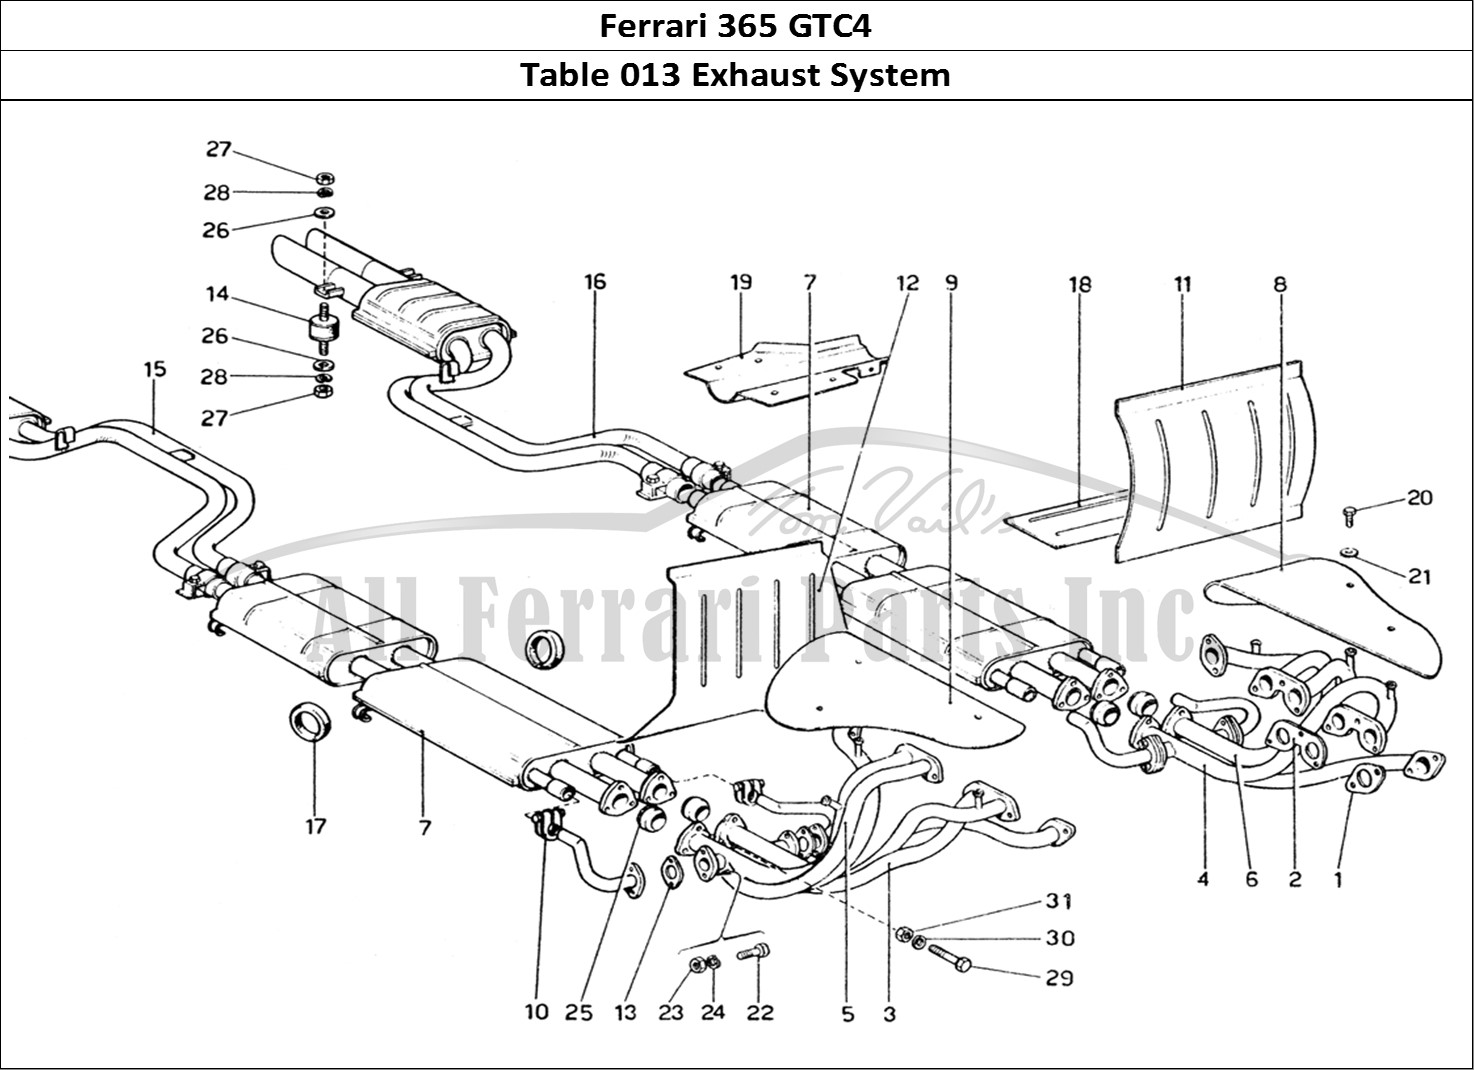 Ferrari Parts Ferrari 365 GTC4 (Mechanical) Page 013 Exhaust system